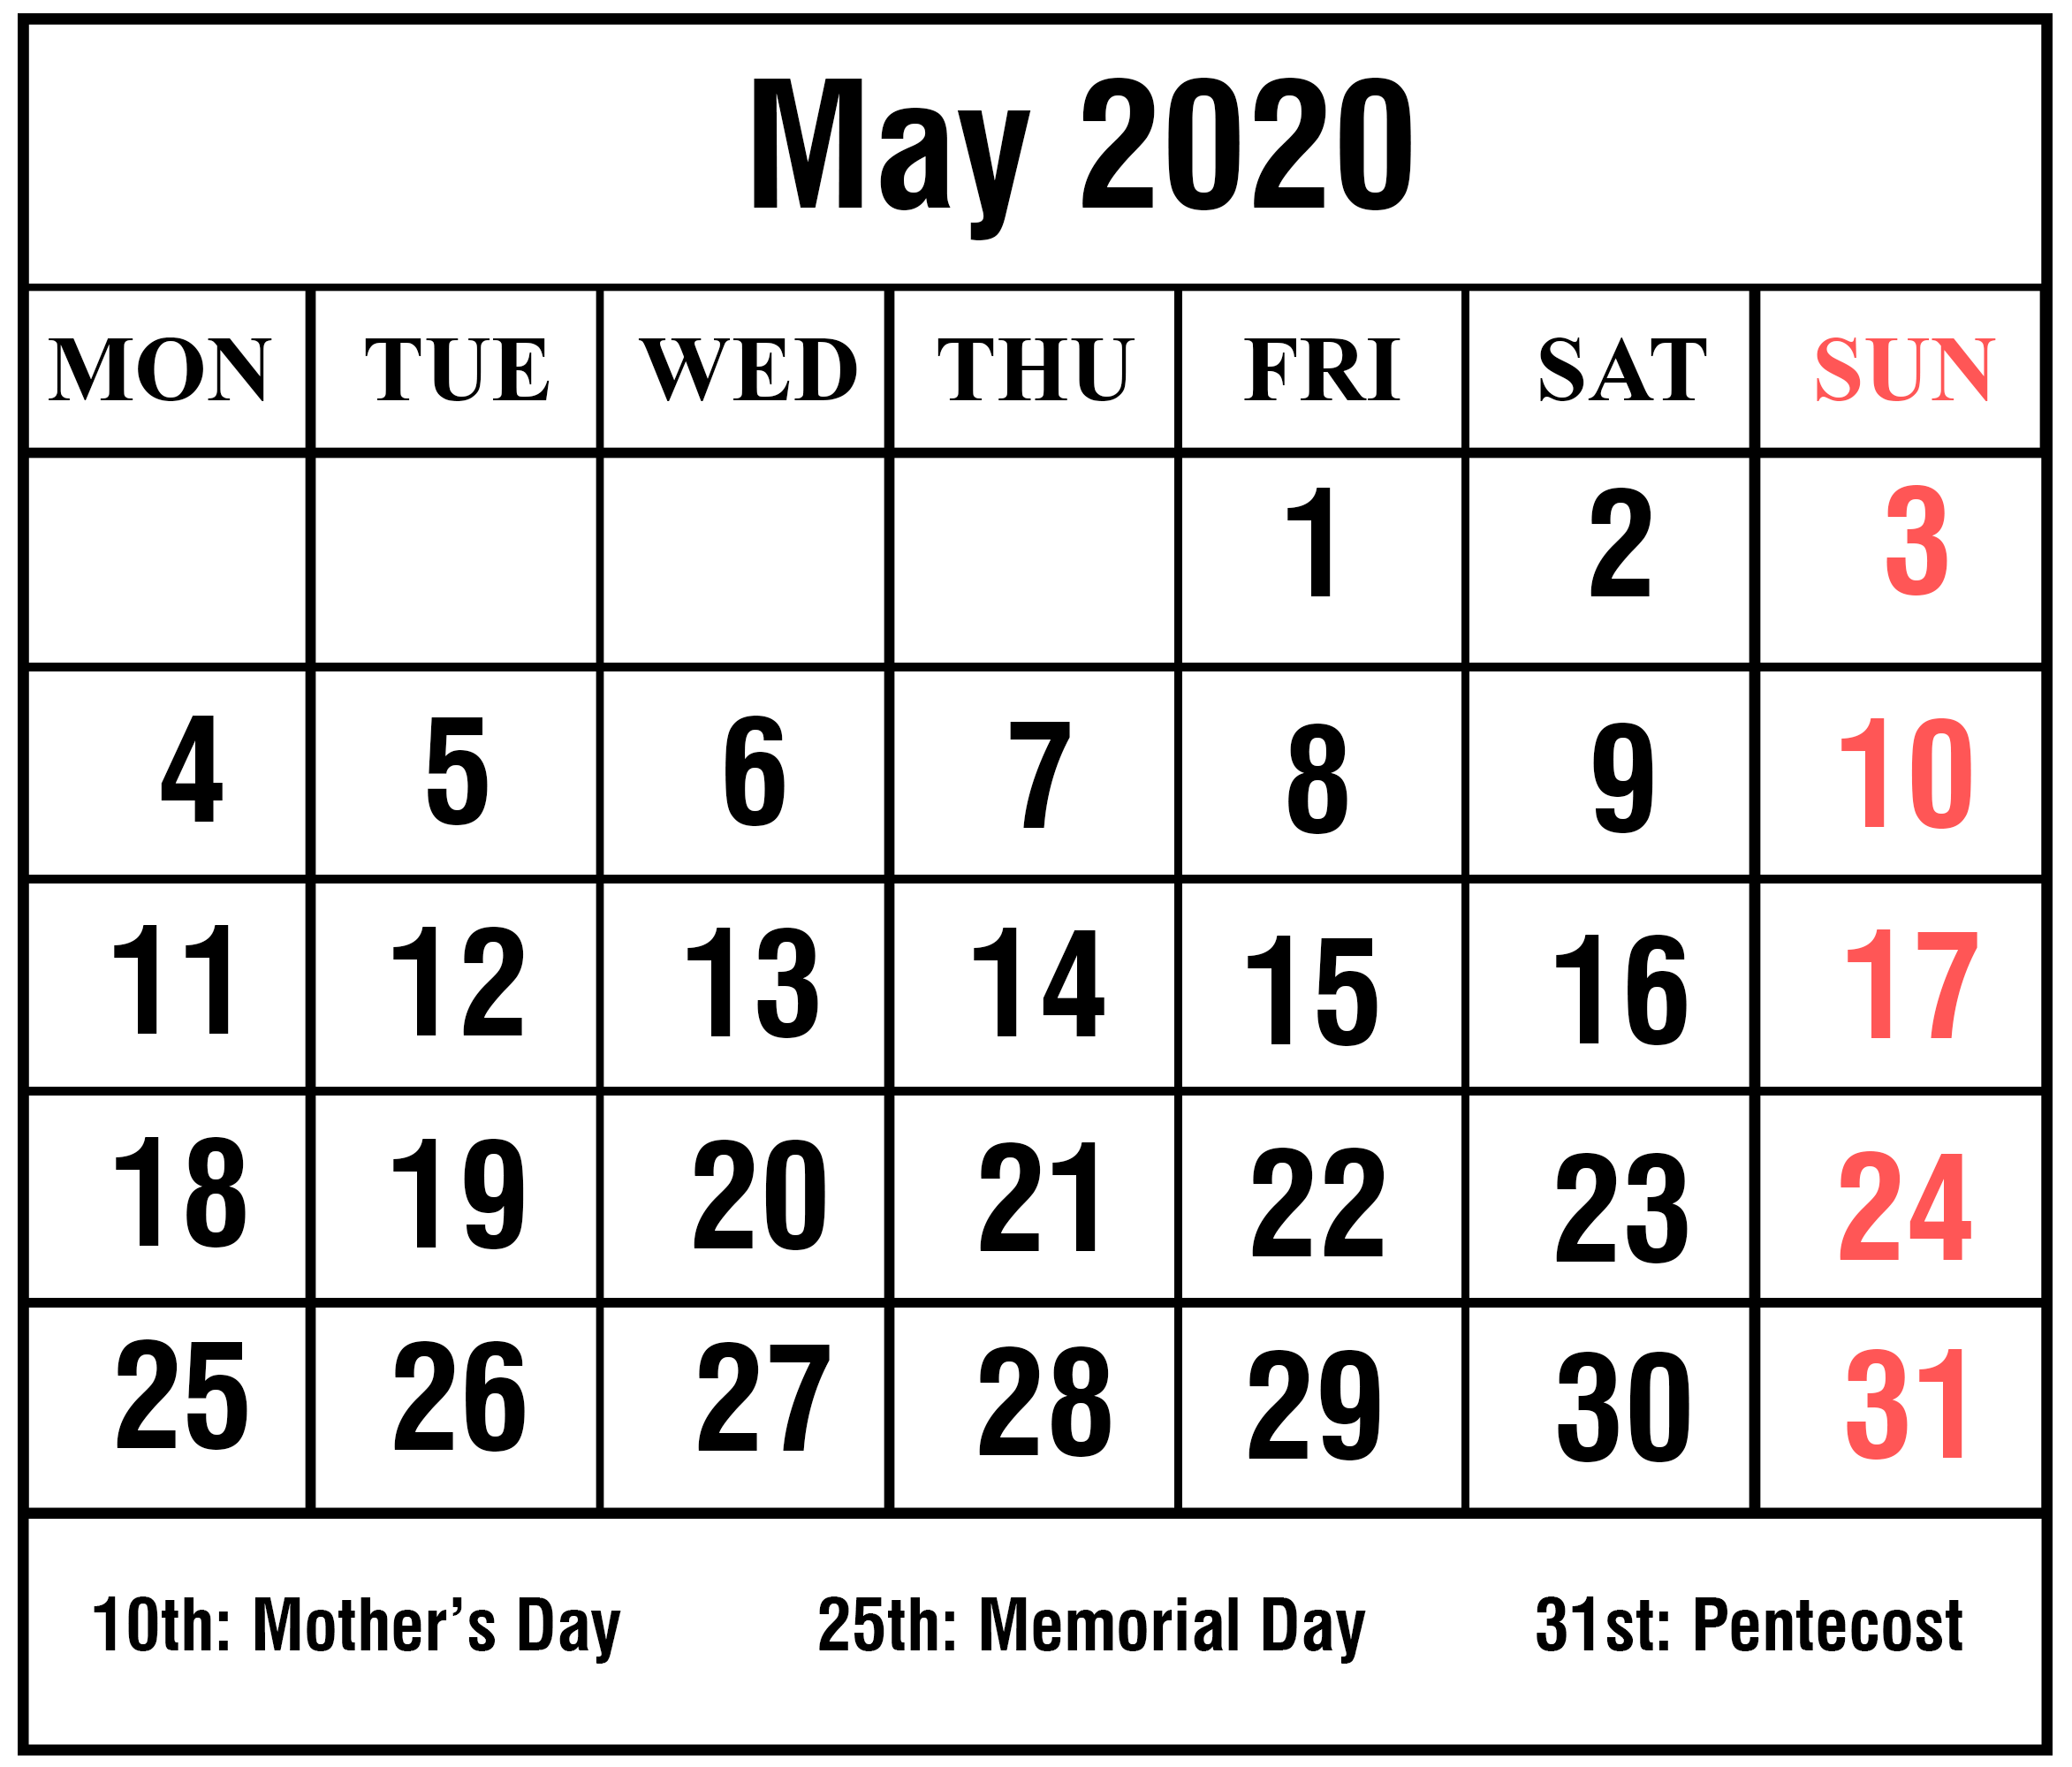 May 2020 Calendar Wallpaper Free May 2020 Calendar